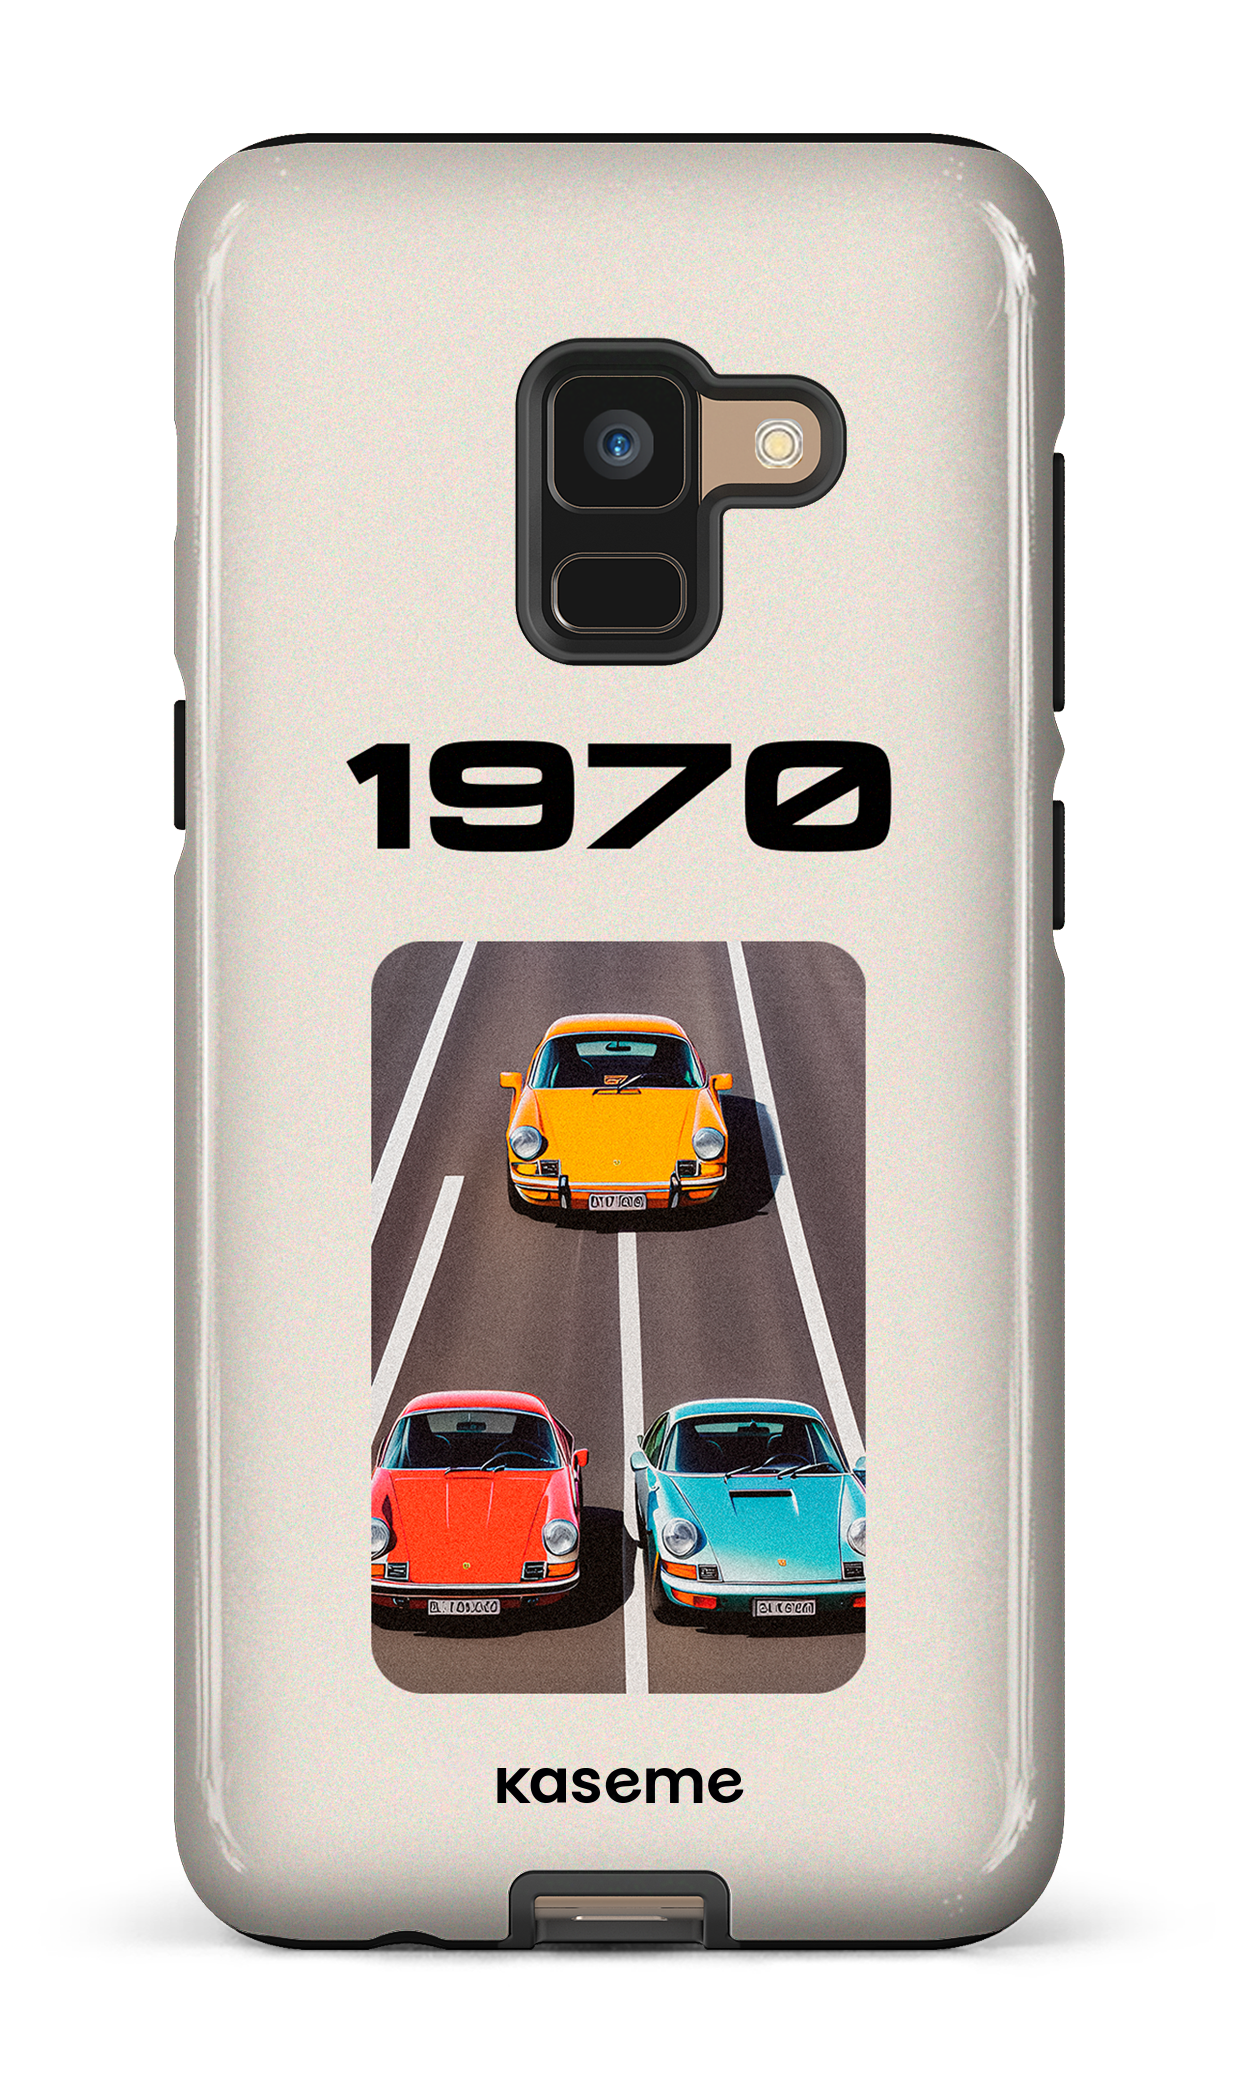 The 1970 - Galaxy A8